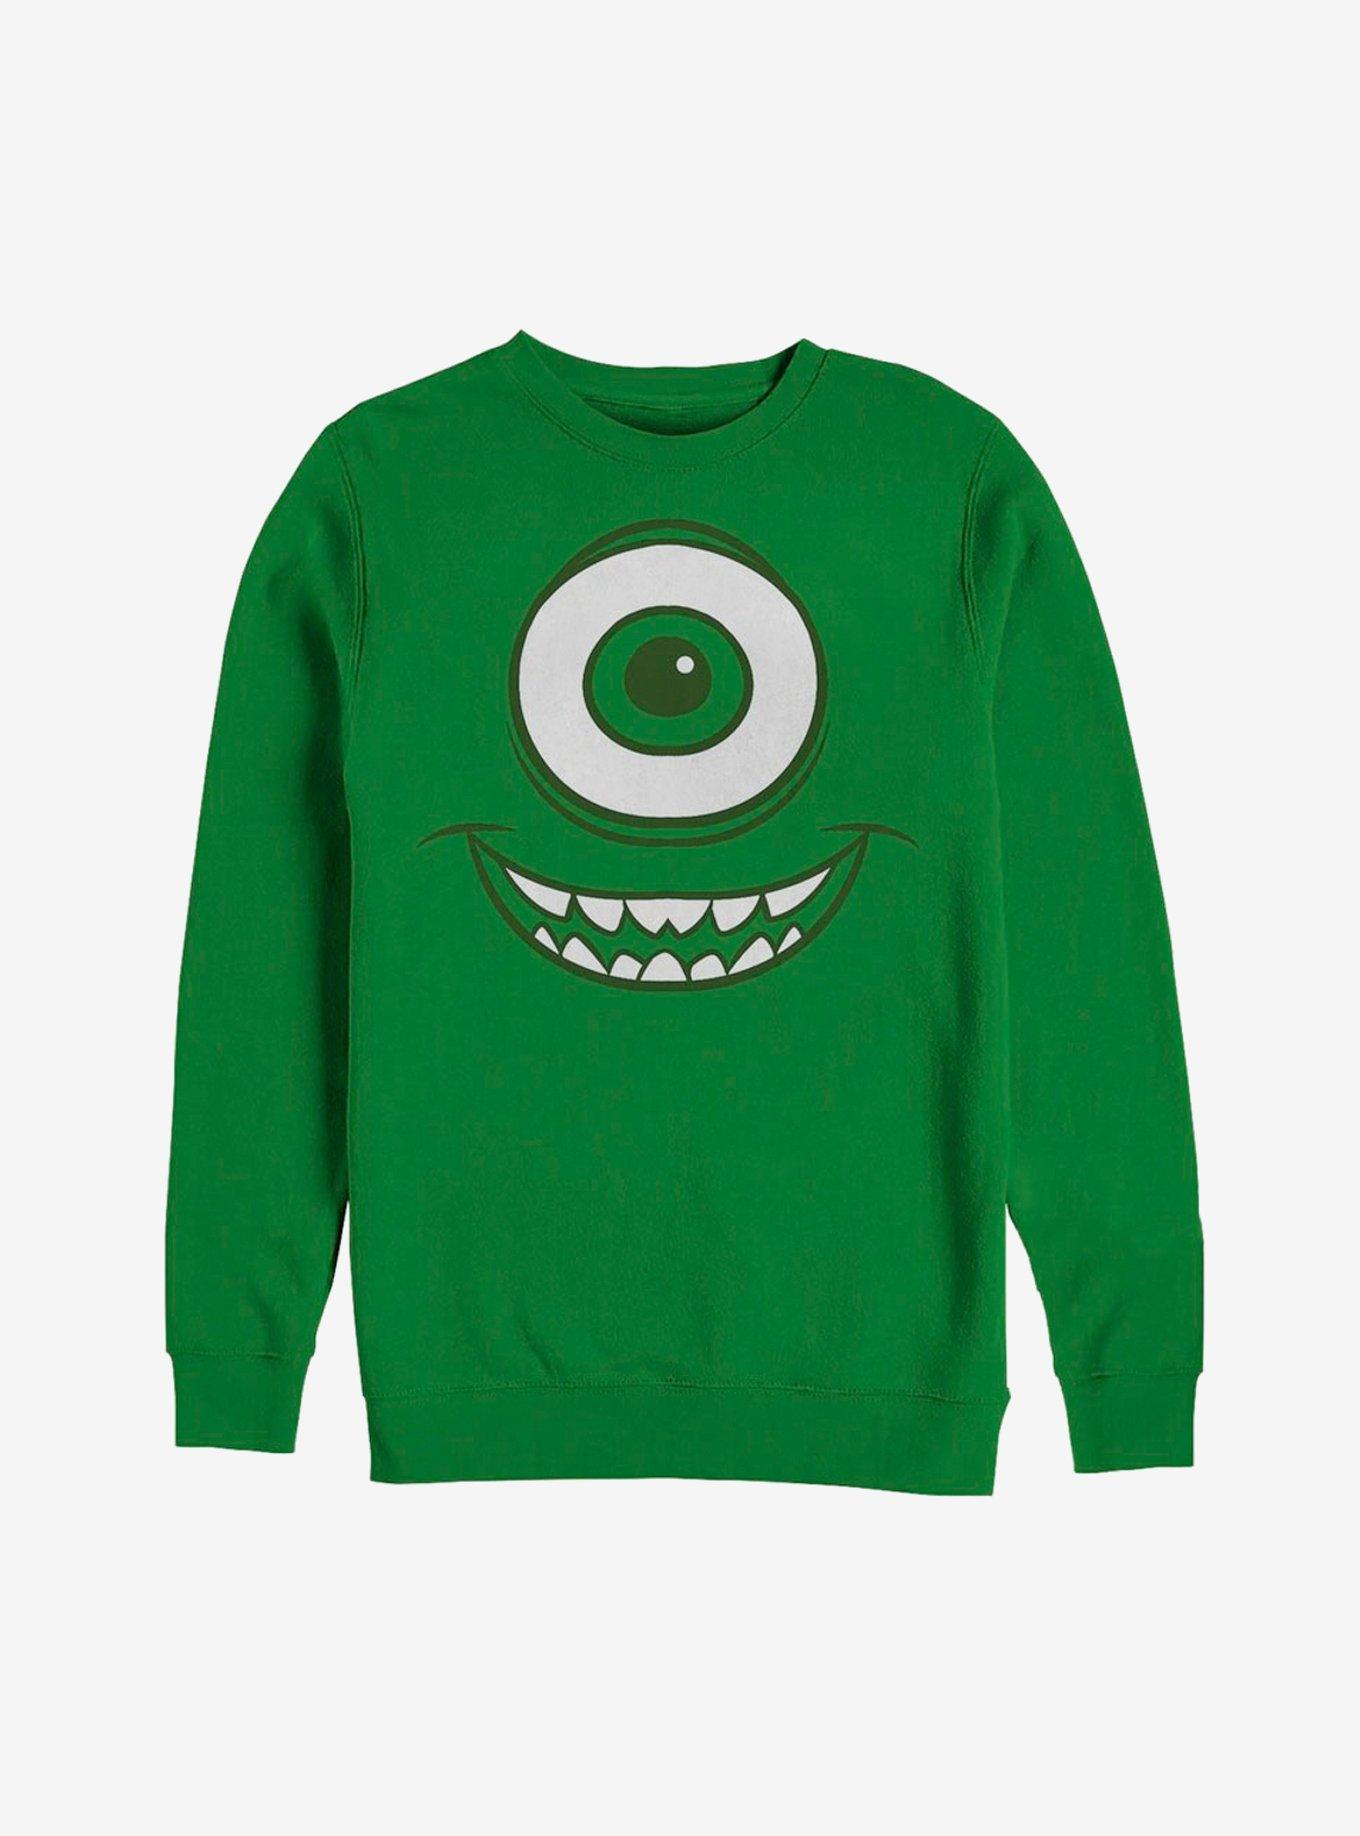 Monsters Inc. Mike Wazowski Eye Sweatshirt